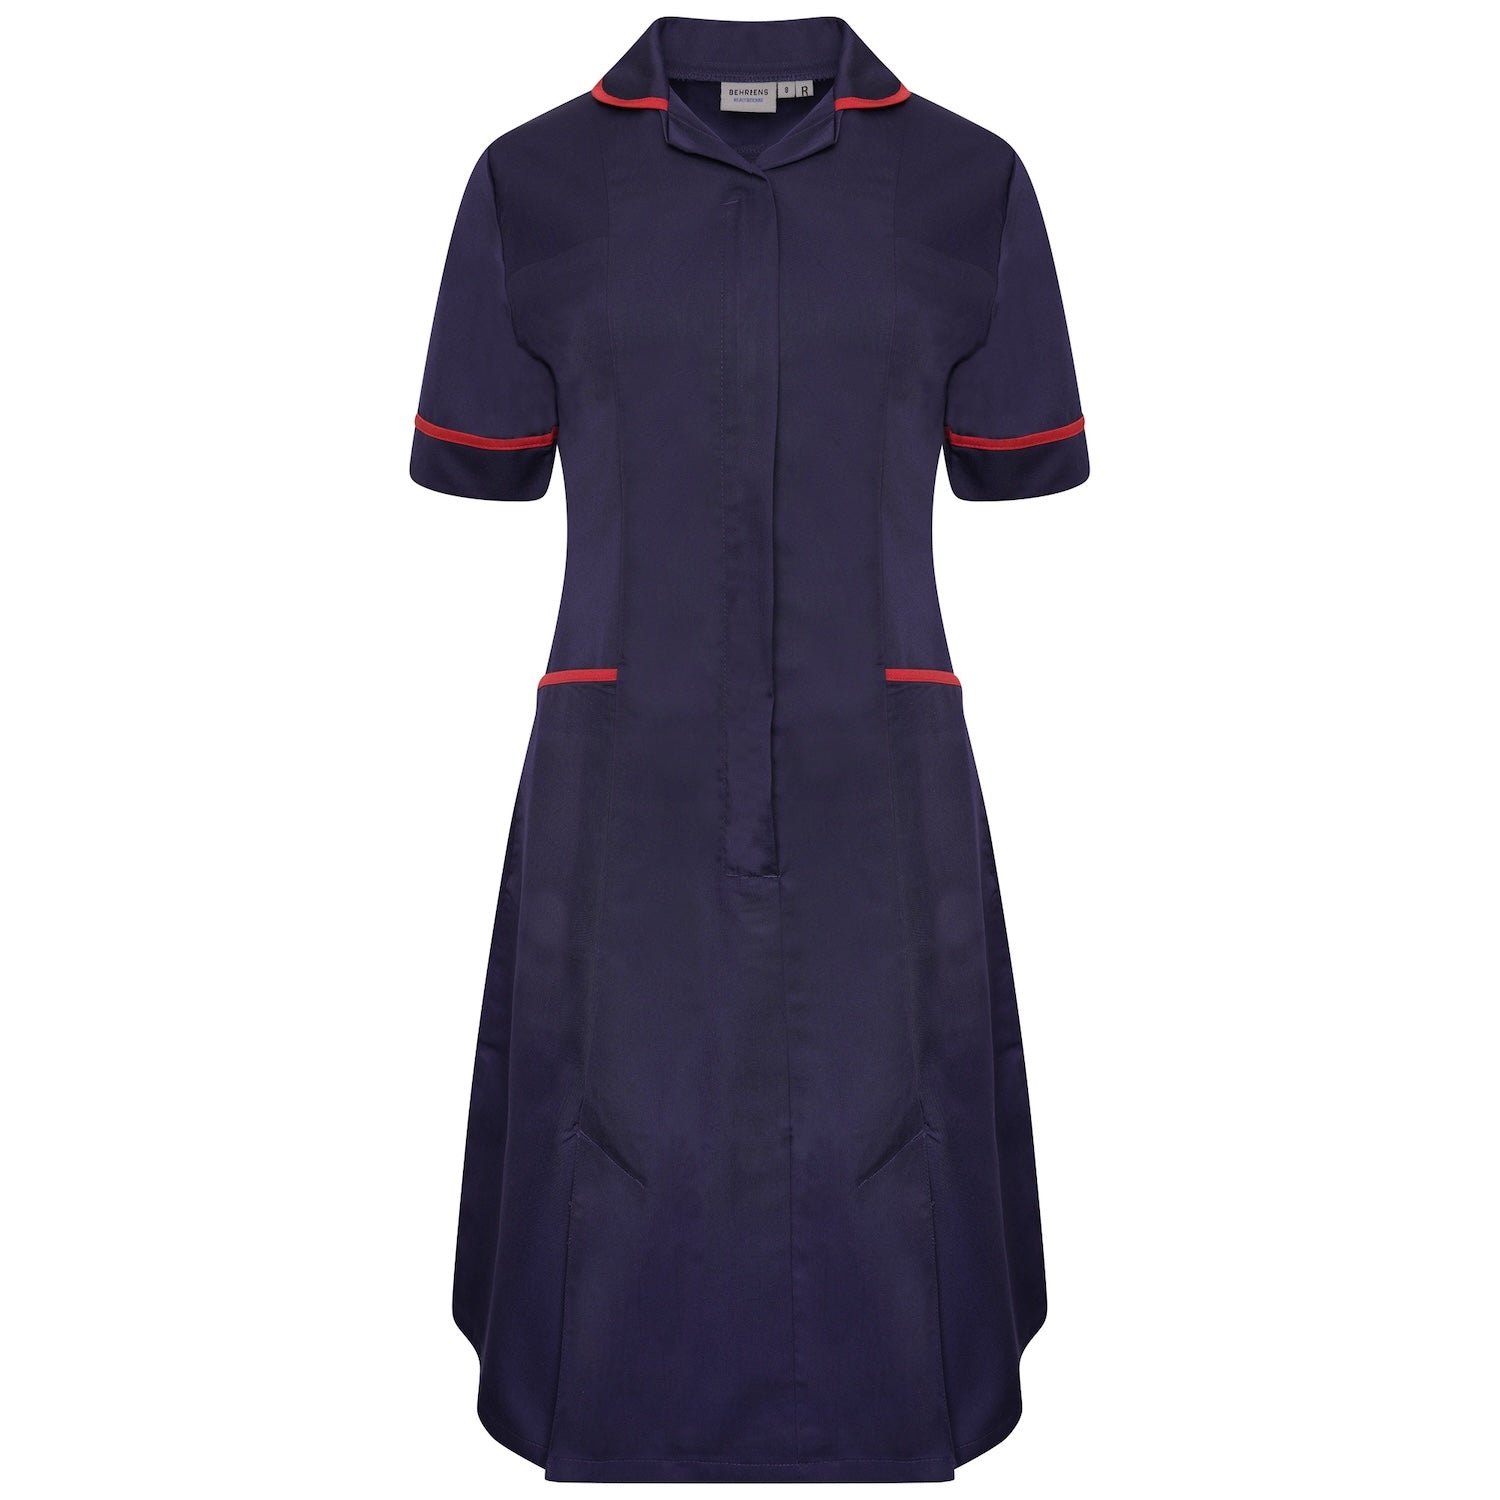 Ladies Healthcare Dress | Round Collar | Navy/Red Trim